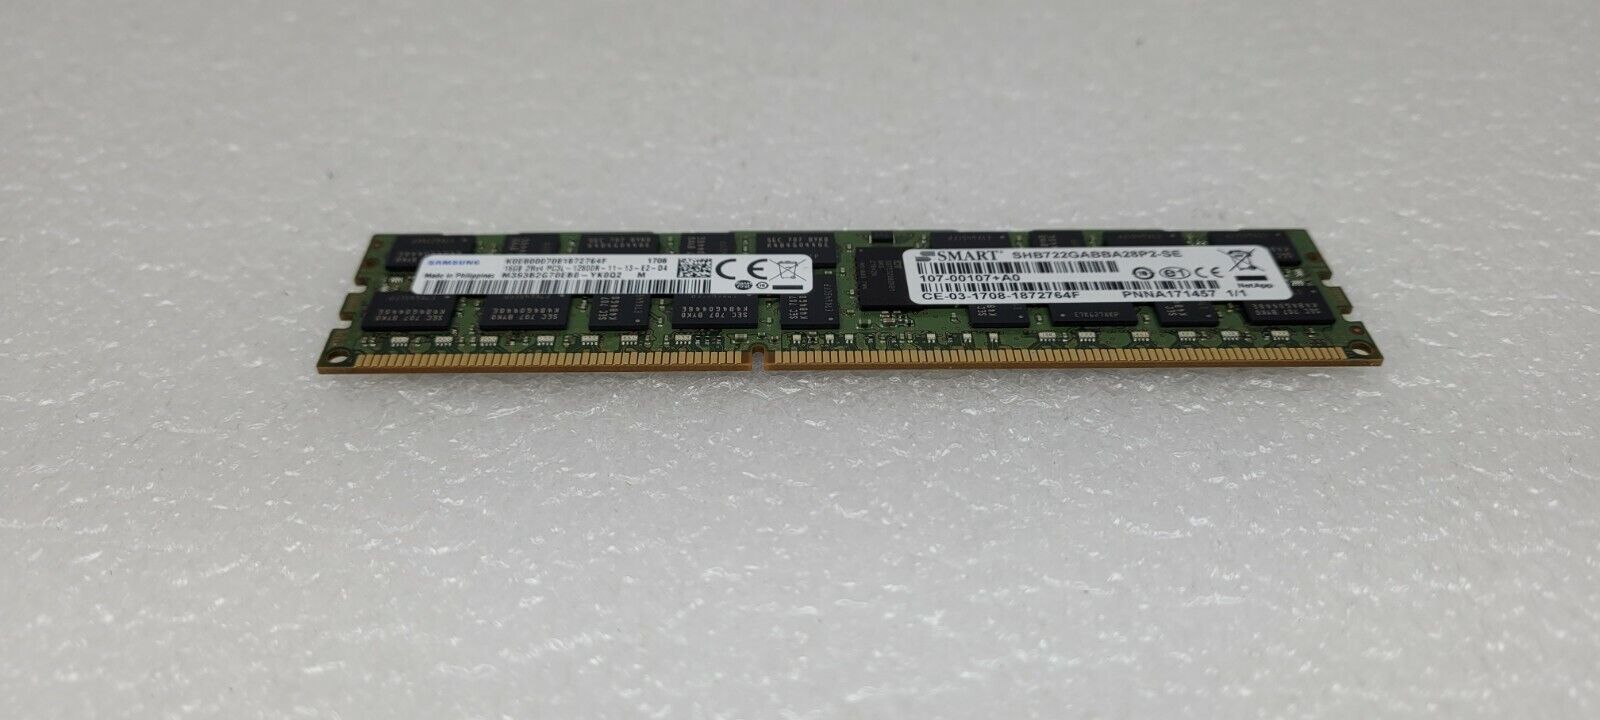 X3214-R6 NetApp 107-00107 16GB ECC REG RAM DIMM Memory Module for FAS8080 Filer